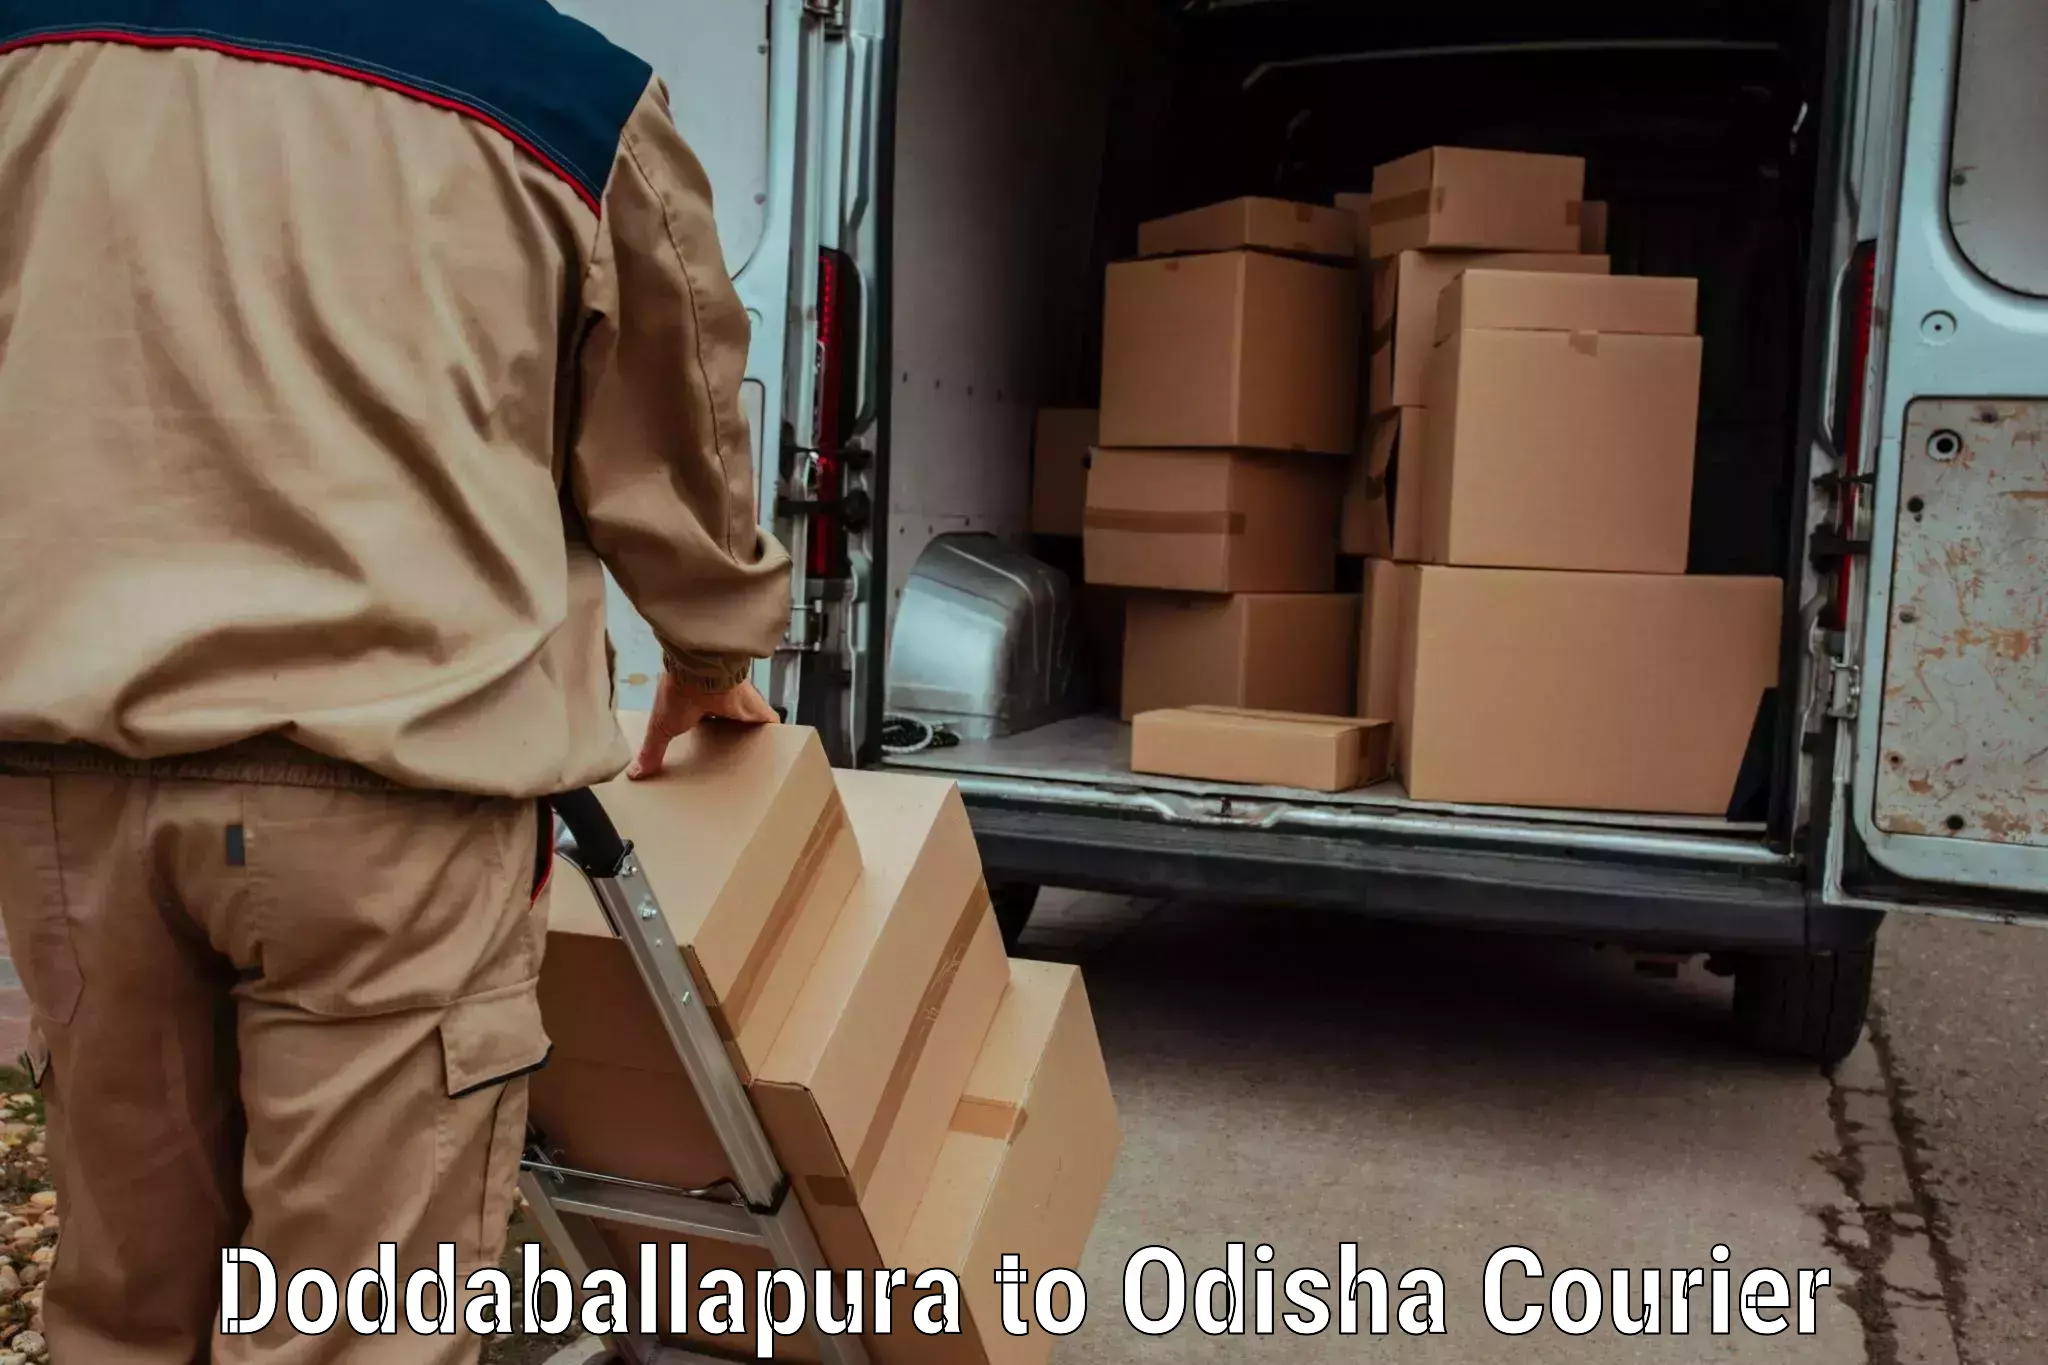 Package forwarding in Doddaballapura to Kishorenagar